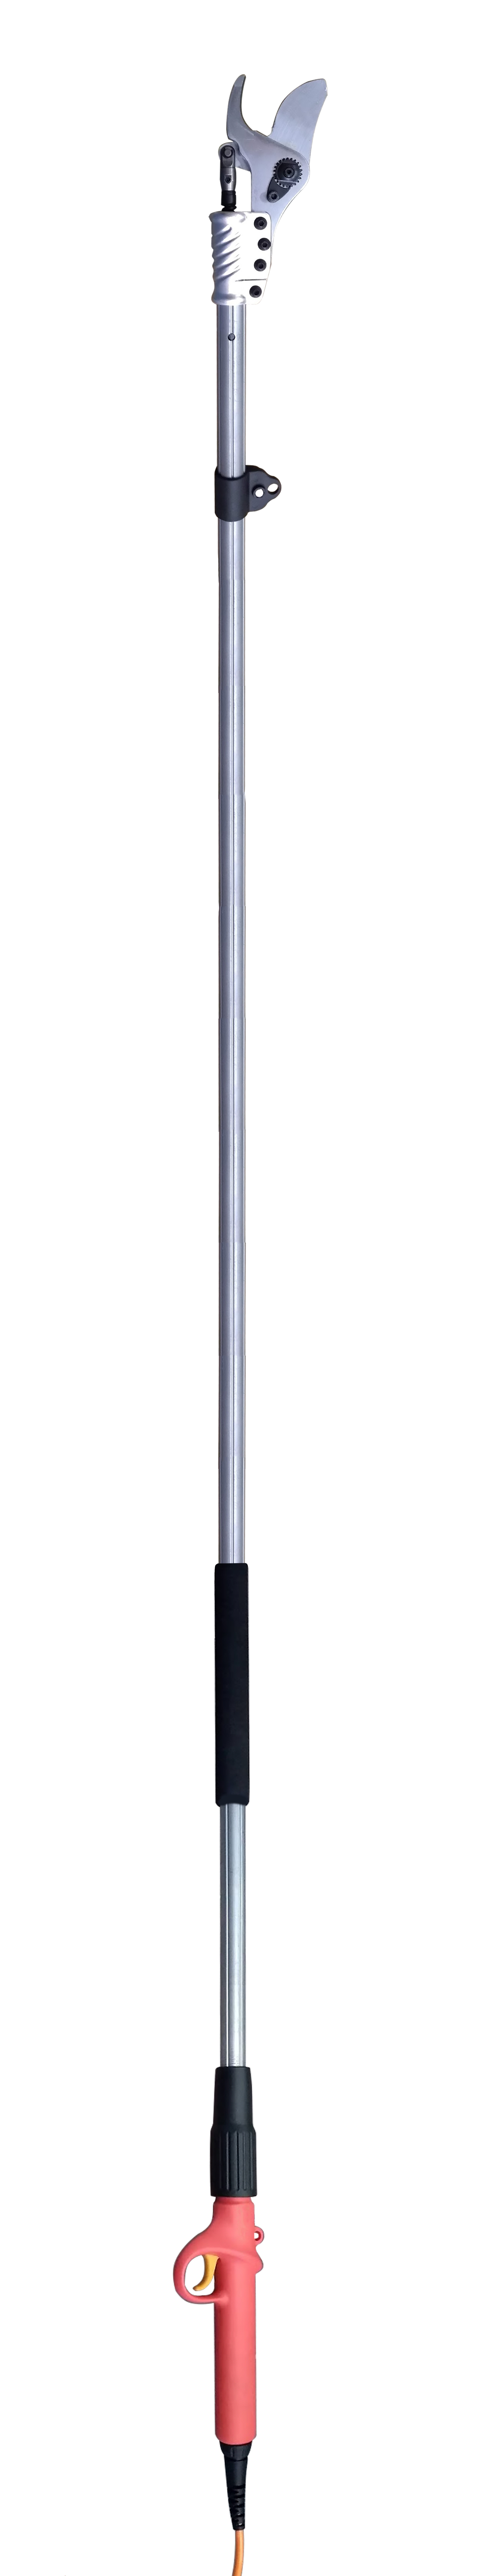 Zenport Long Reach ePruner Replacement Pole Part LEP848-POLE-1 Aluminum Pole, Blade Rod Assembly